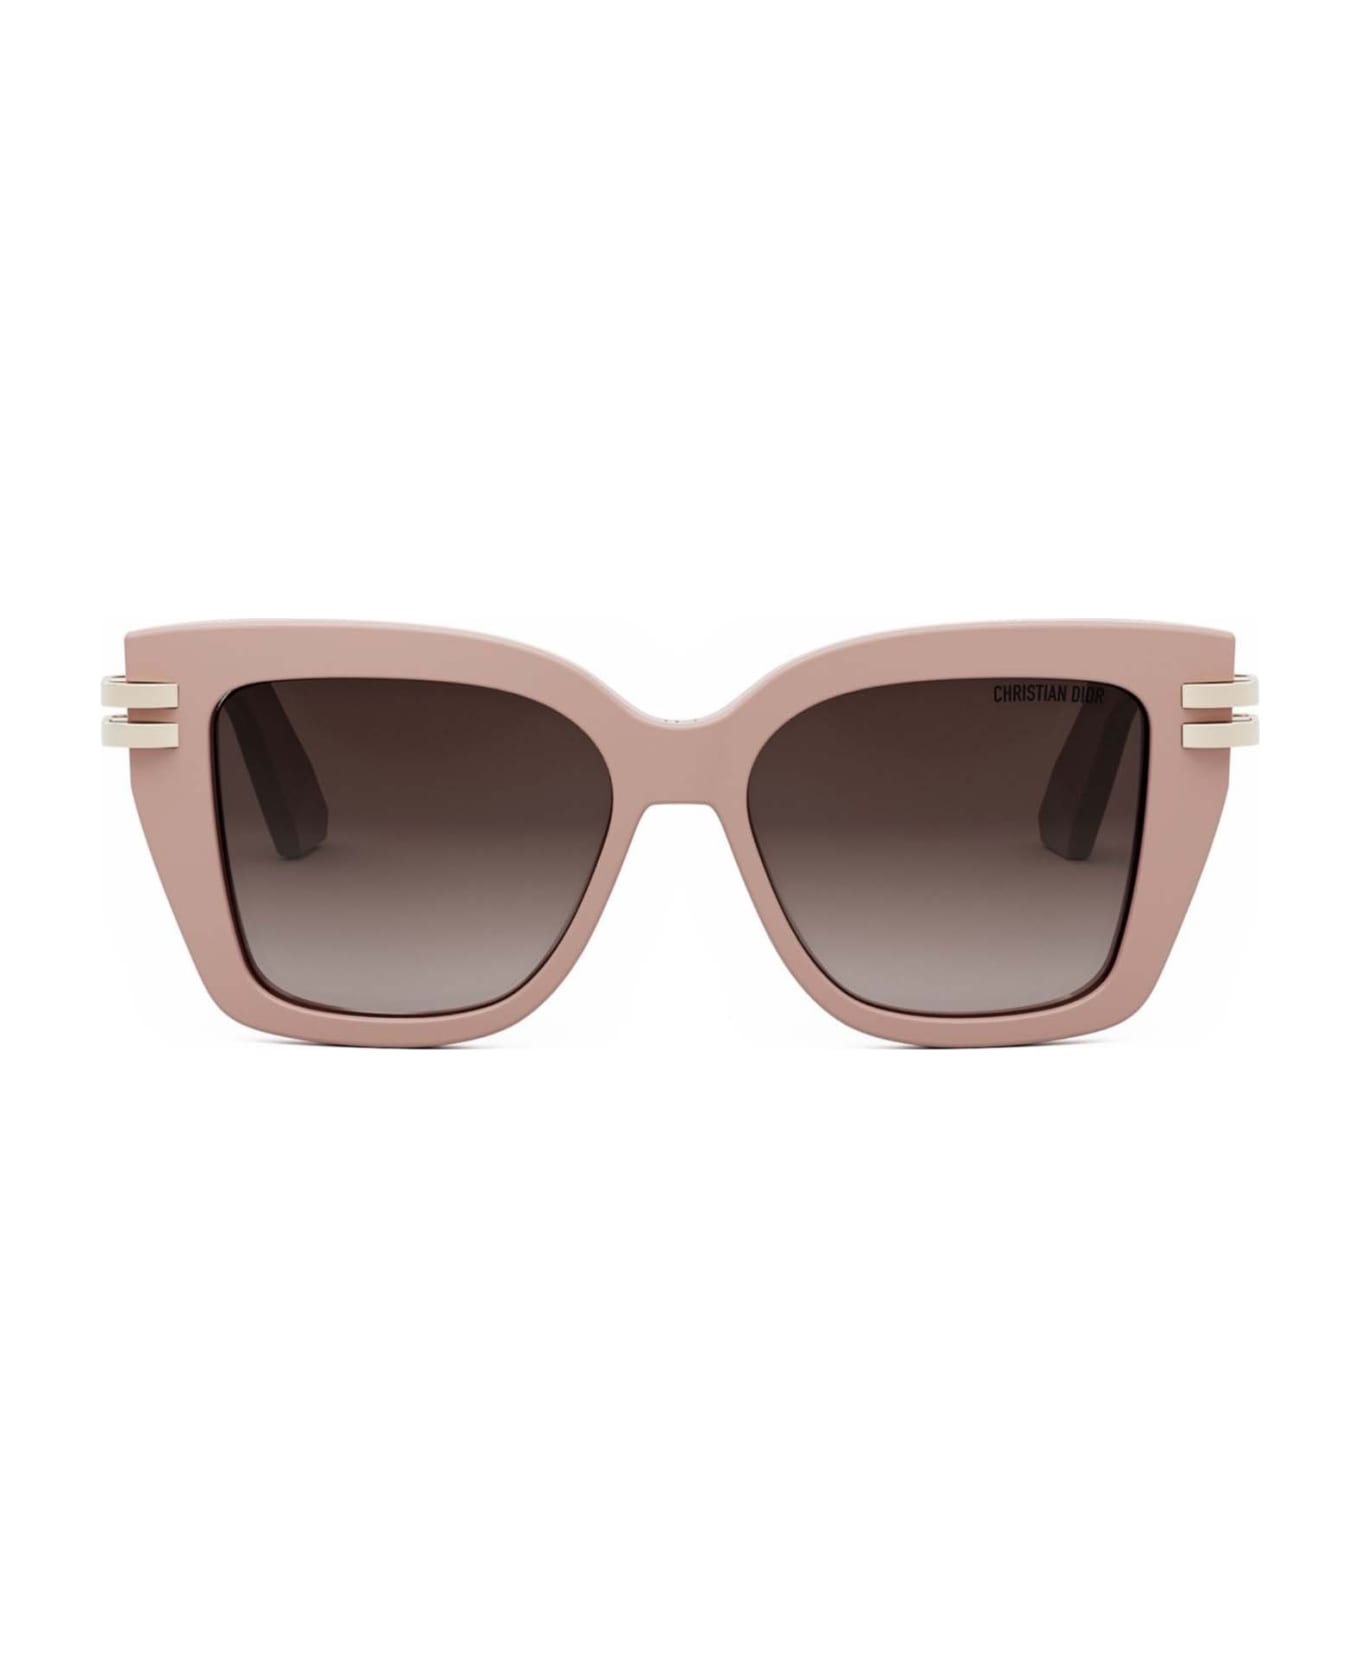 Dior Eyewear Sunglasses - Rosa/Marrone sfumato